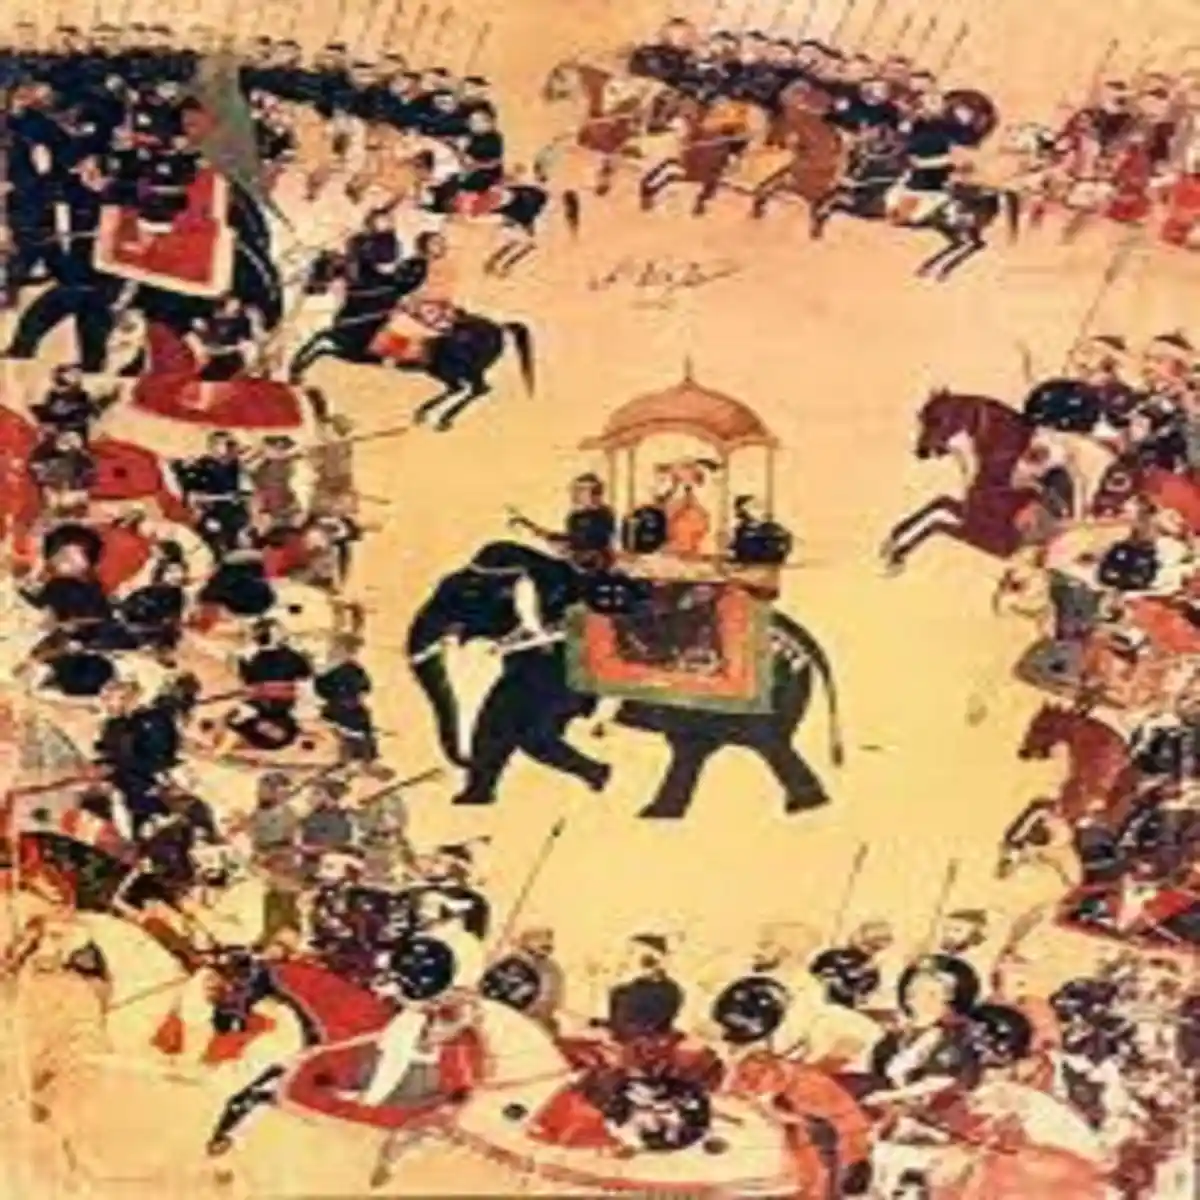 The battle of samugarh, fought between Aurangazeb and Dara Shikoh, Image source- ASHA Blast From The Past